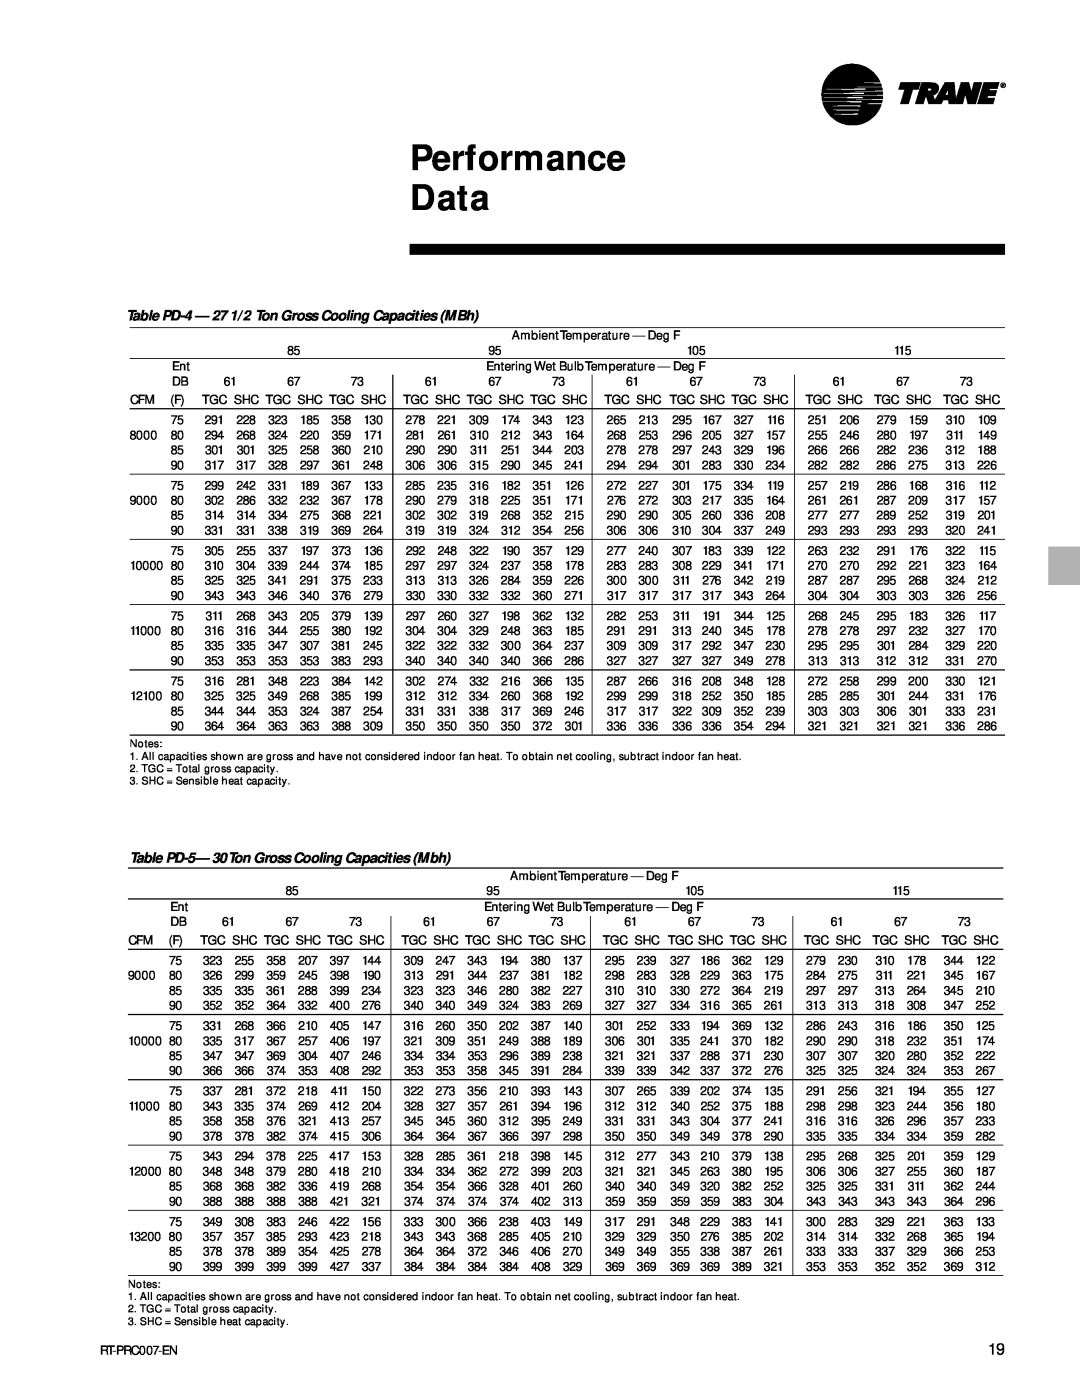 Trane RT-PRC007-EN manual Performance Data, Table PD-5-30Ton Gross Cooling Capacities Mbh 